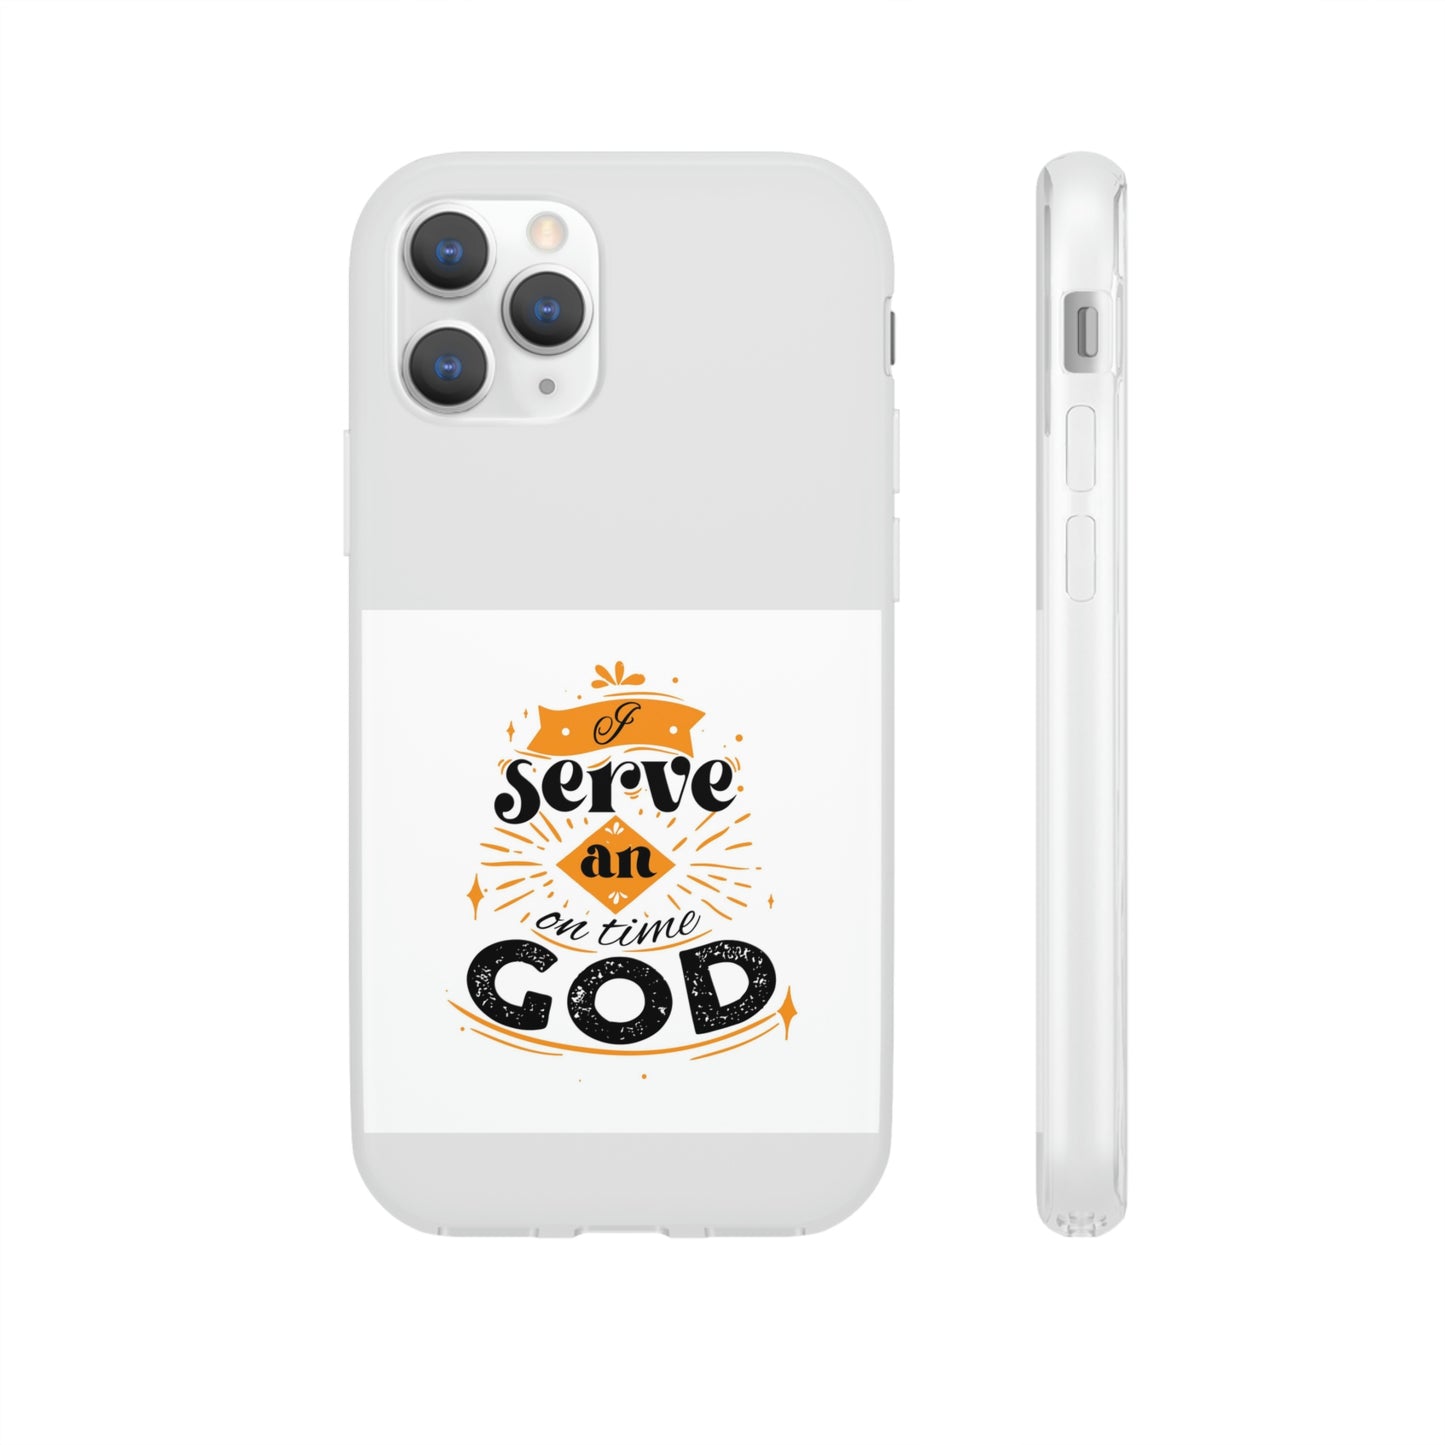 I Serve An On Time God Flexi Phone Case